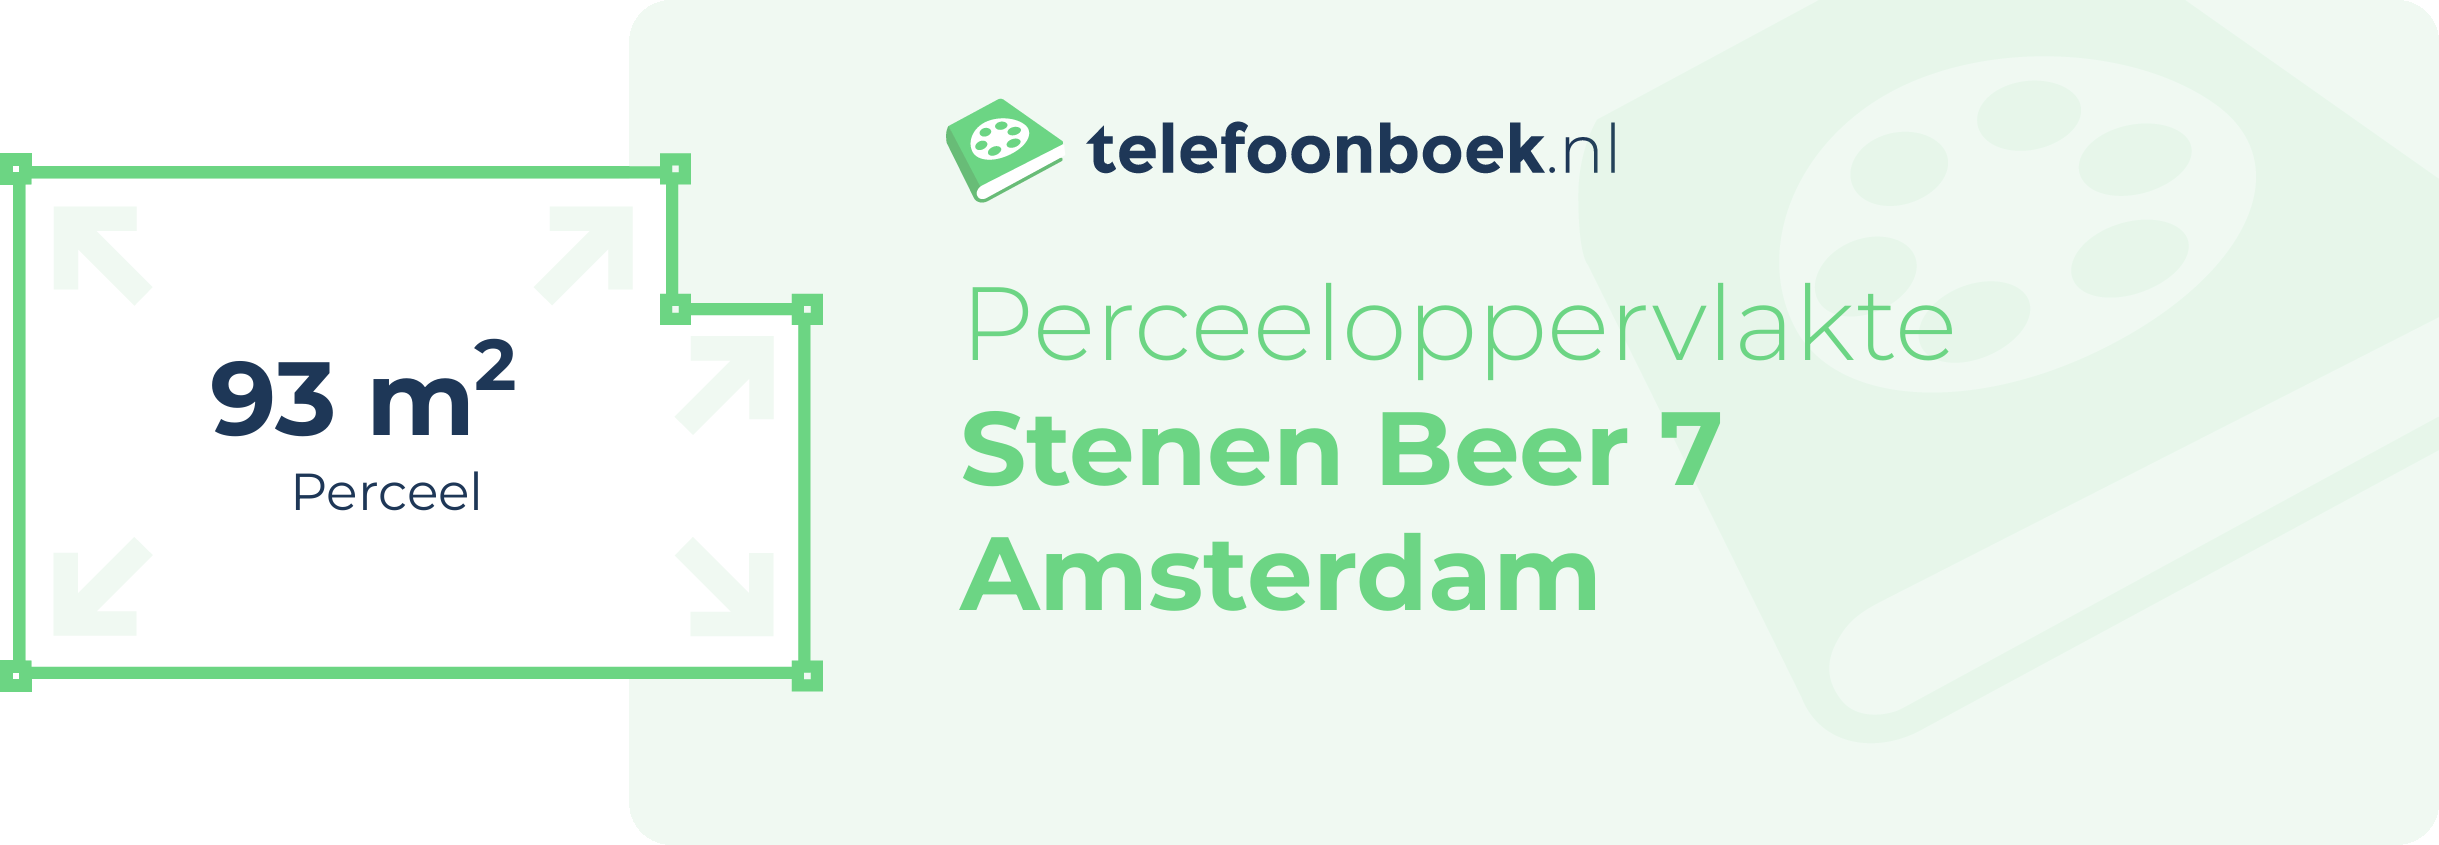 Perceeloppervlakte Stenen Beer 7 Amsterdam